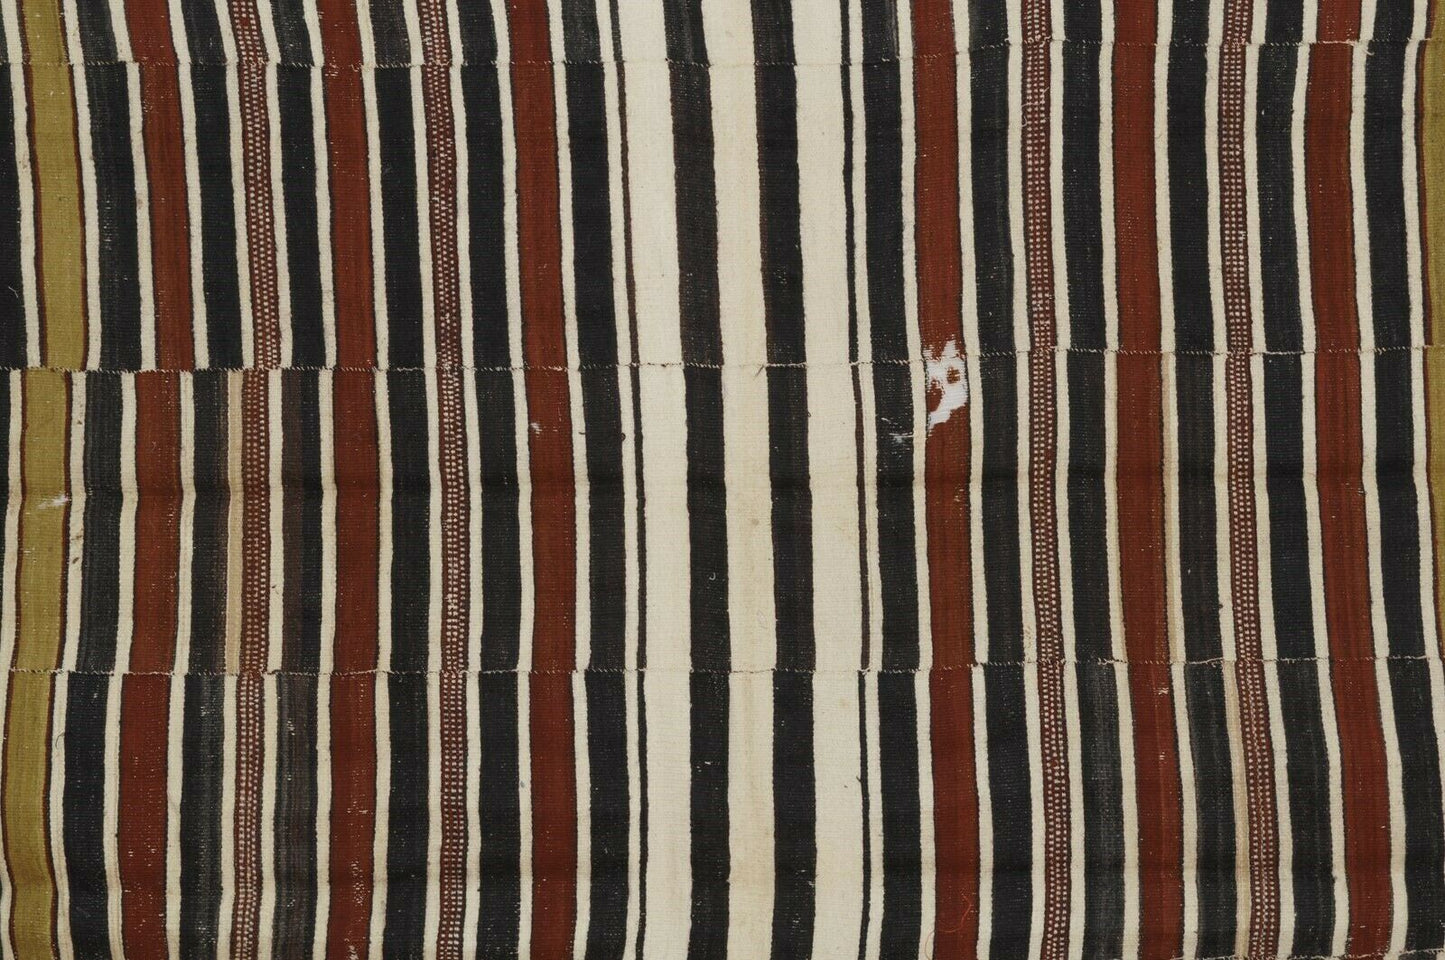 Antique African Fulani cloth blanket Kaasa Khasa Mali textile Sahara Art - Tribalgh